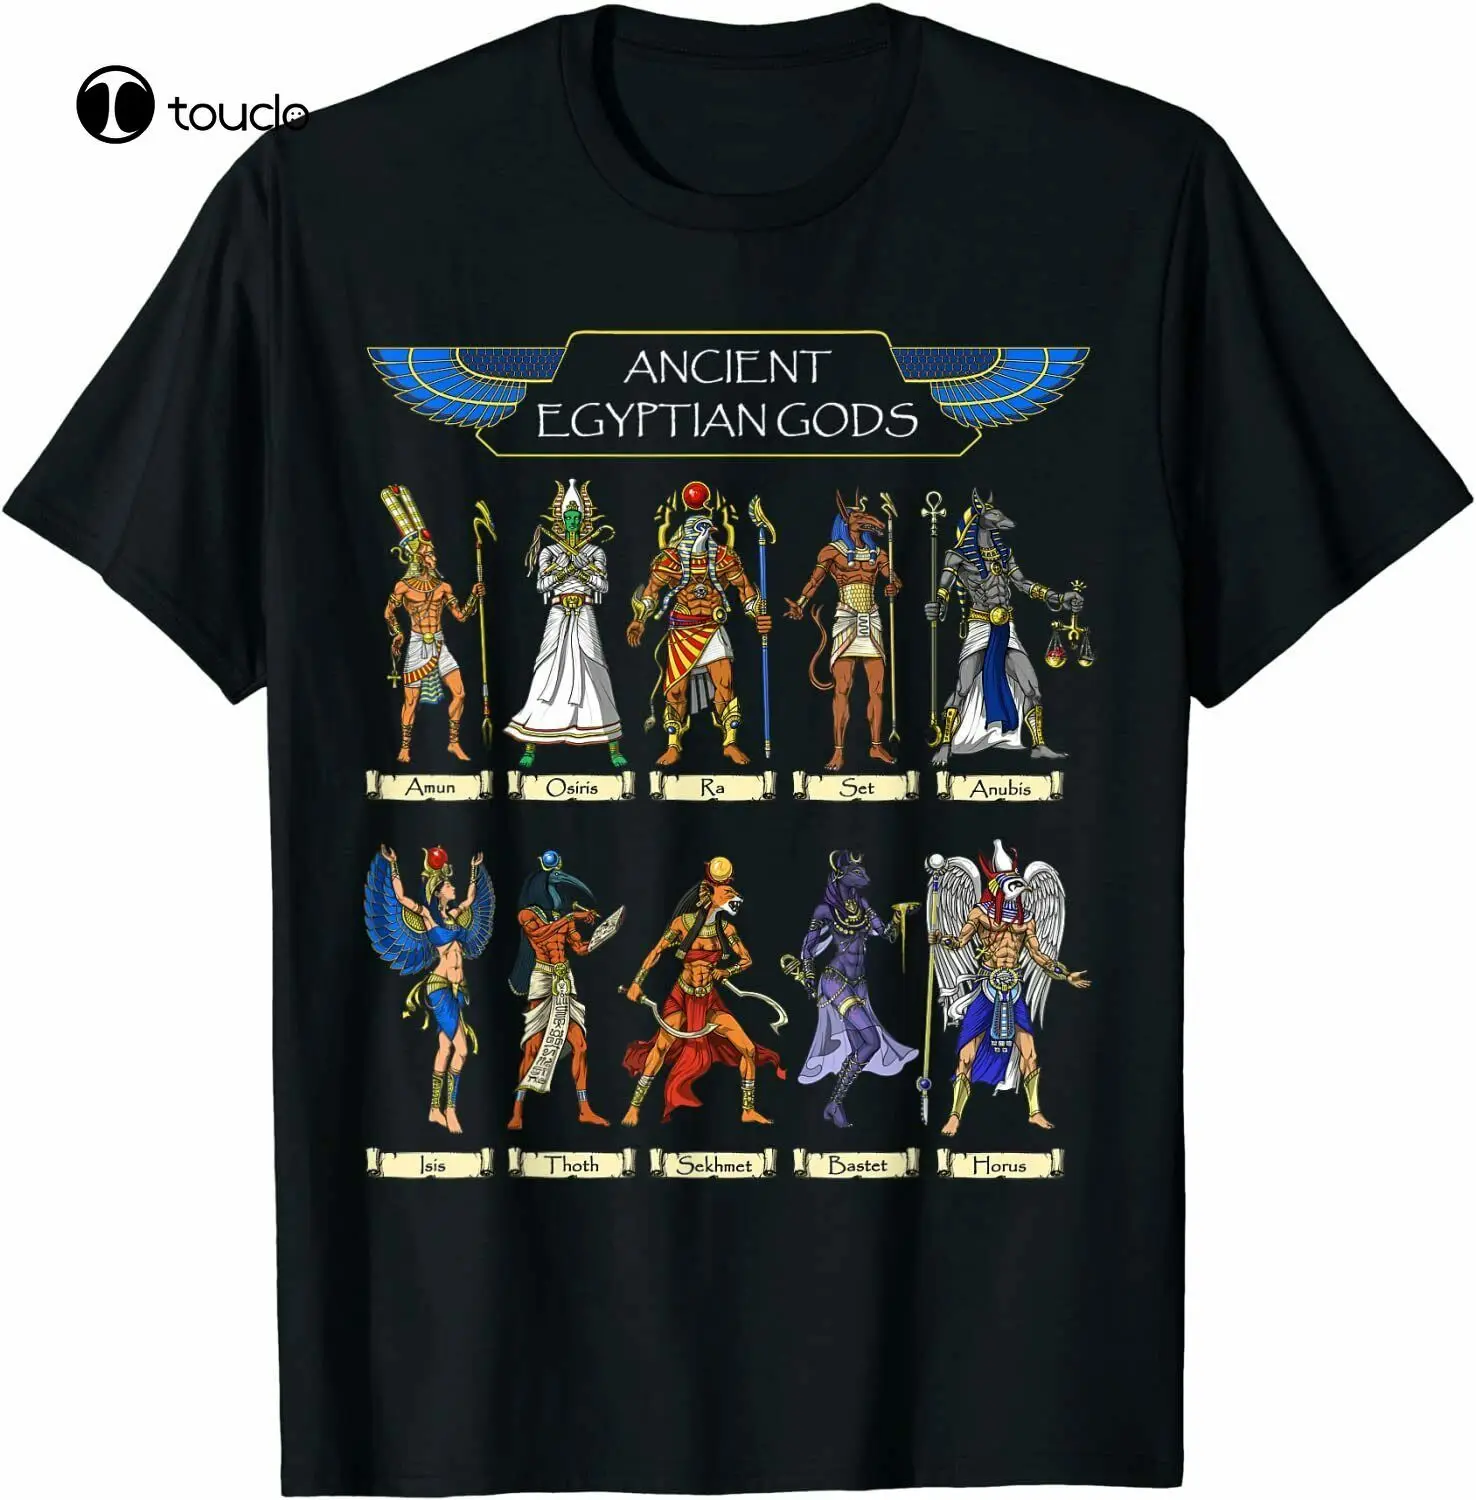 

New Egyptian Gods Ancient Mythology Pharaoh Anubis Thoth Horus - T Shirt S-5Xl Tee Shirt Cotton T Shirt Fashion Tshirt Summer